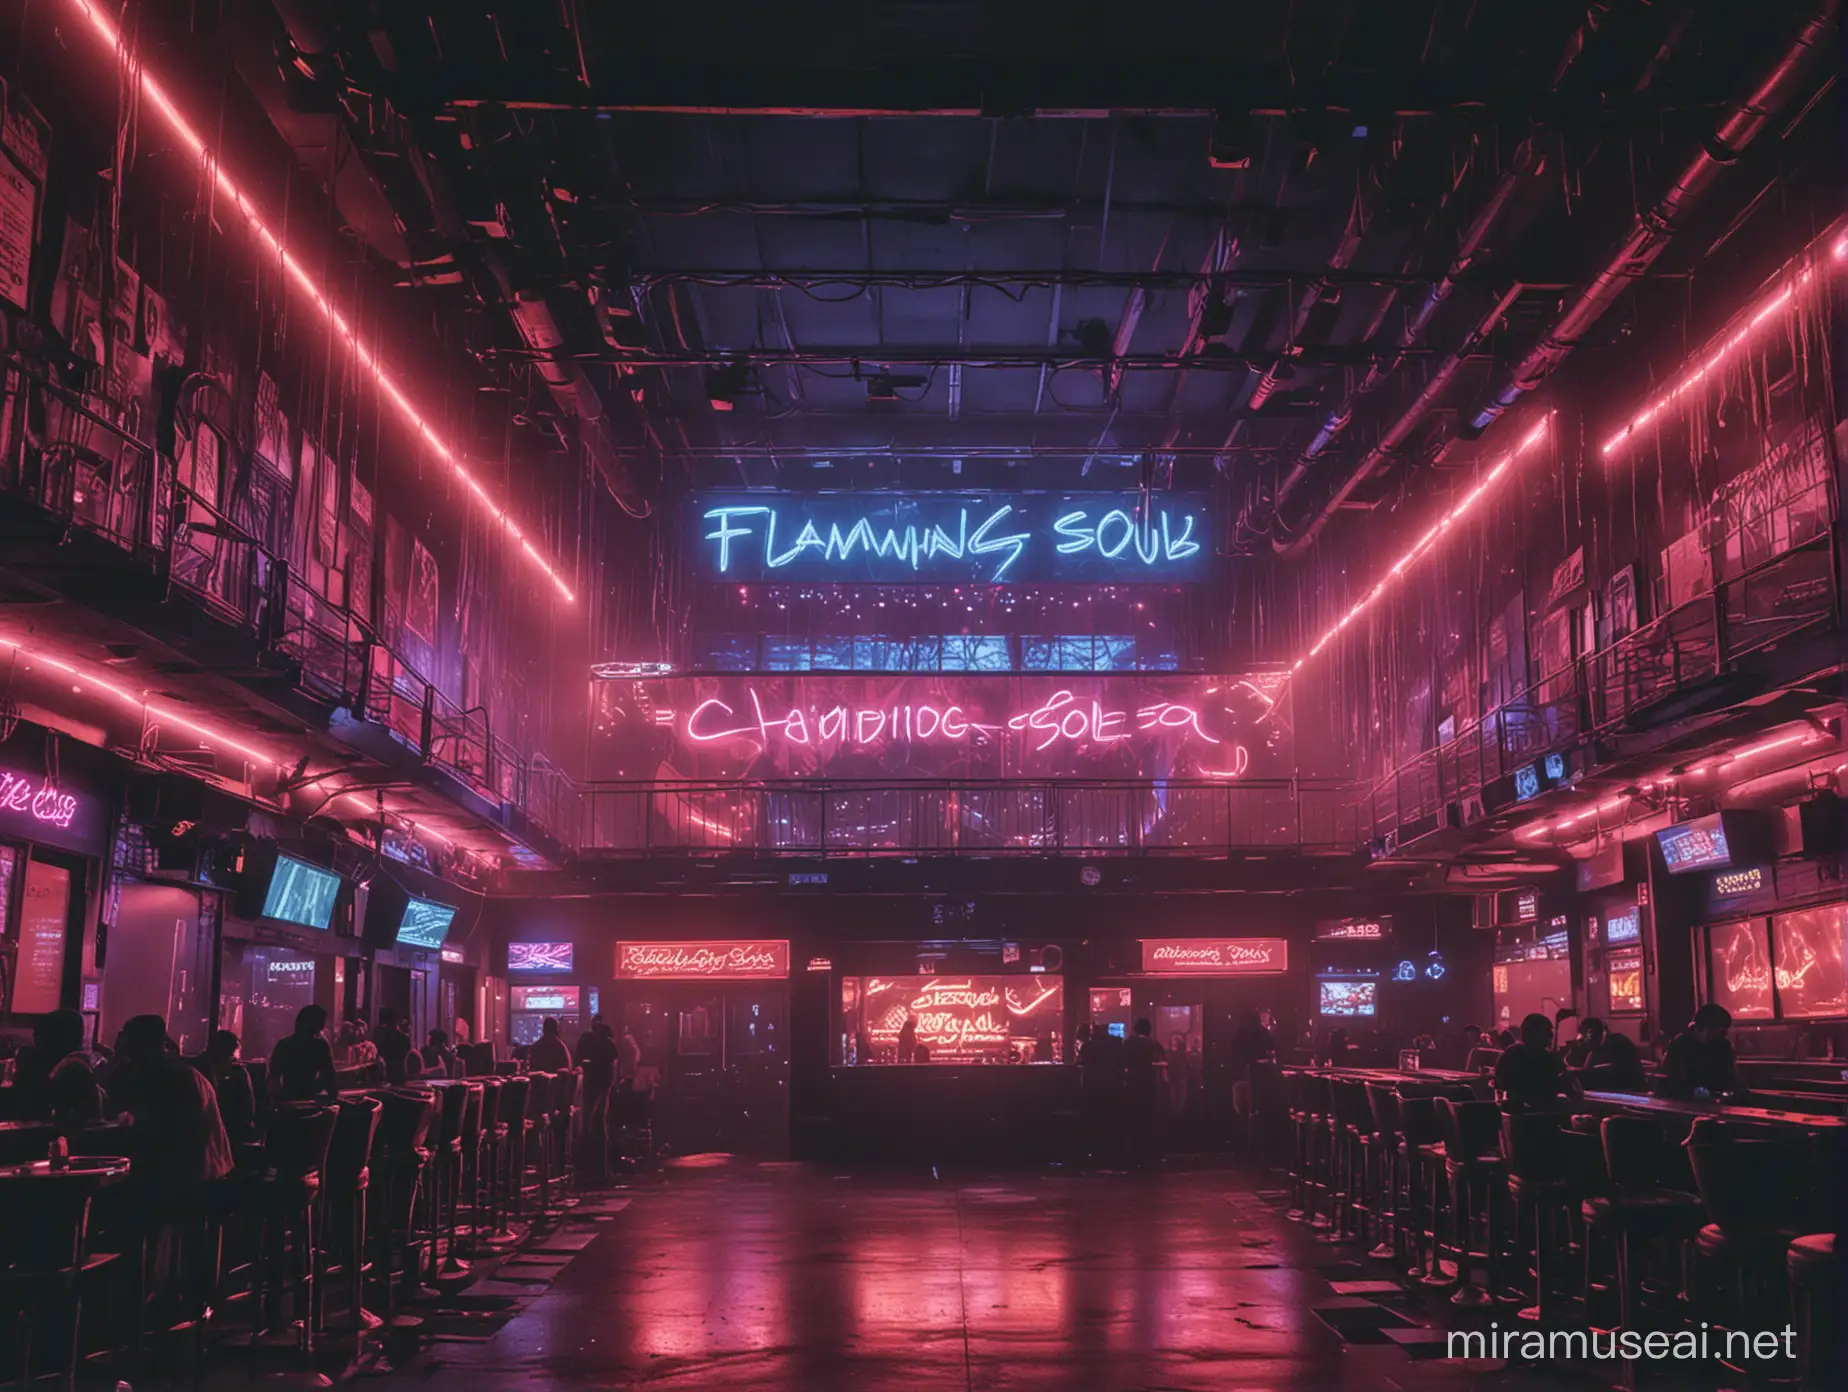 a cyberpunk big night club in staten Island New York, the club has the name "FLAMING SOUL"